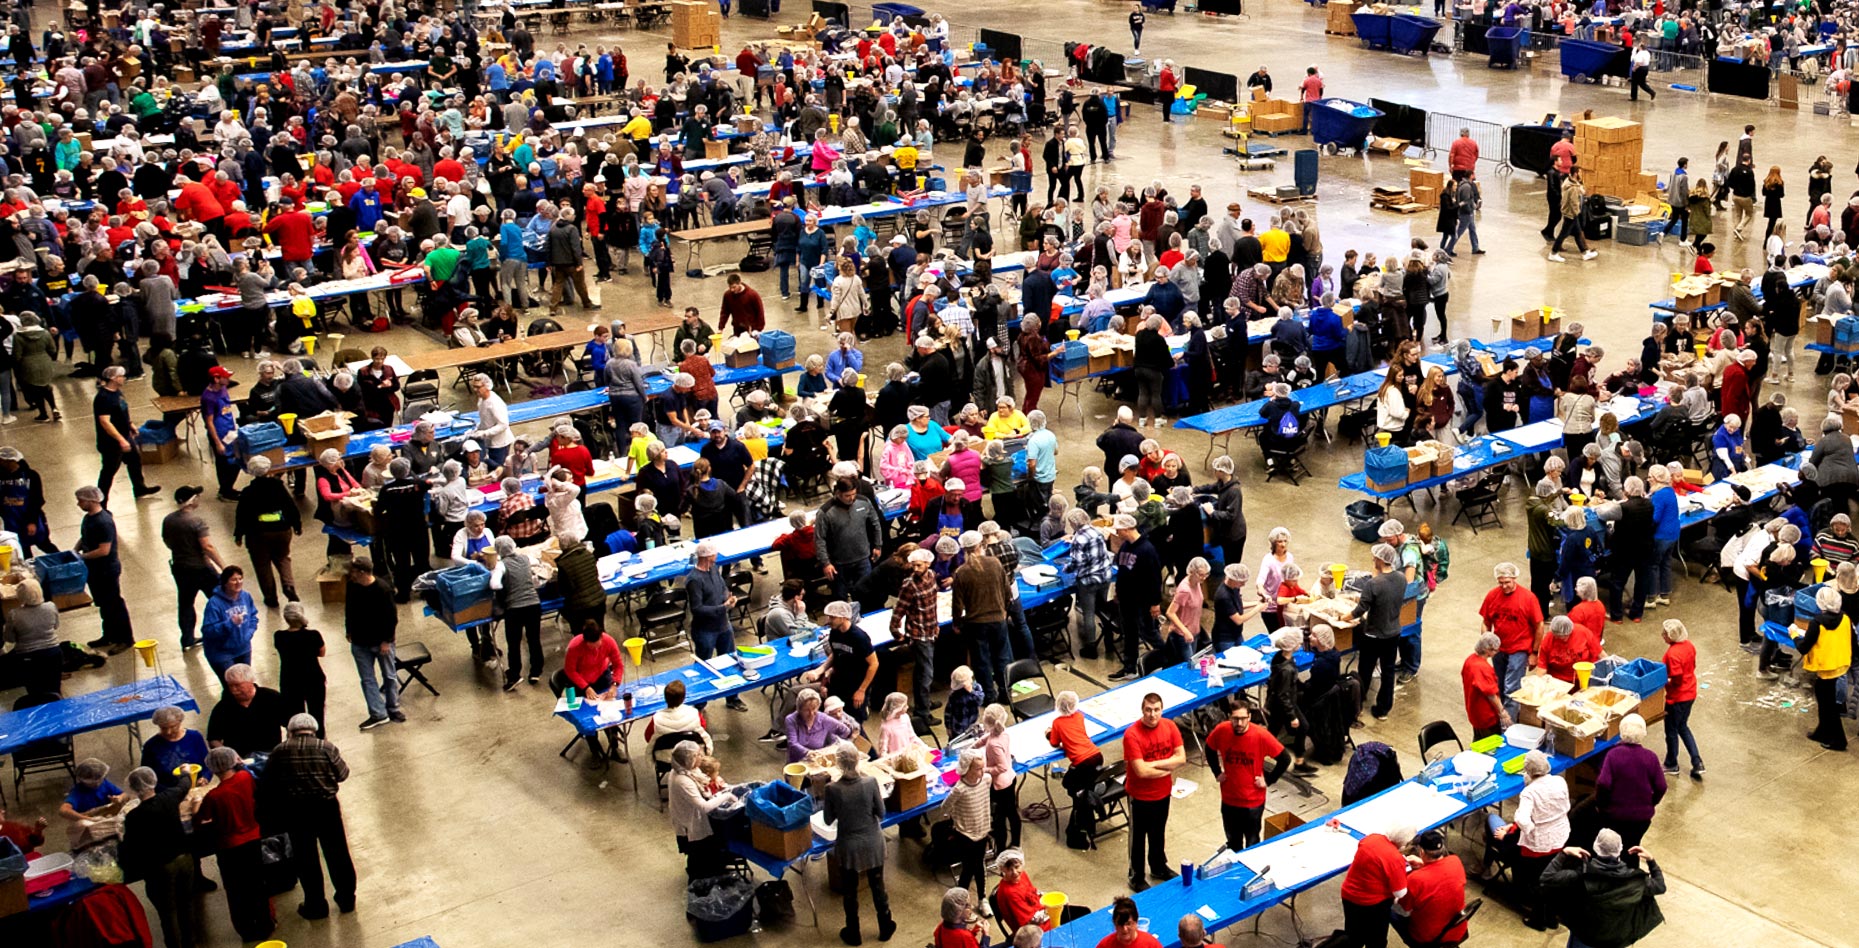 Community Packs 100,000 Meals